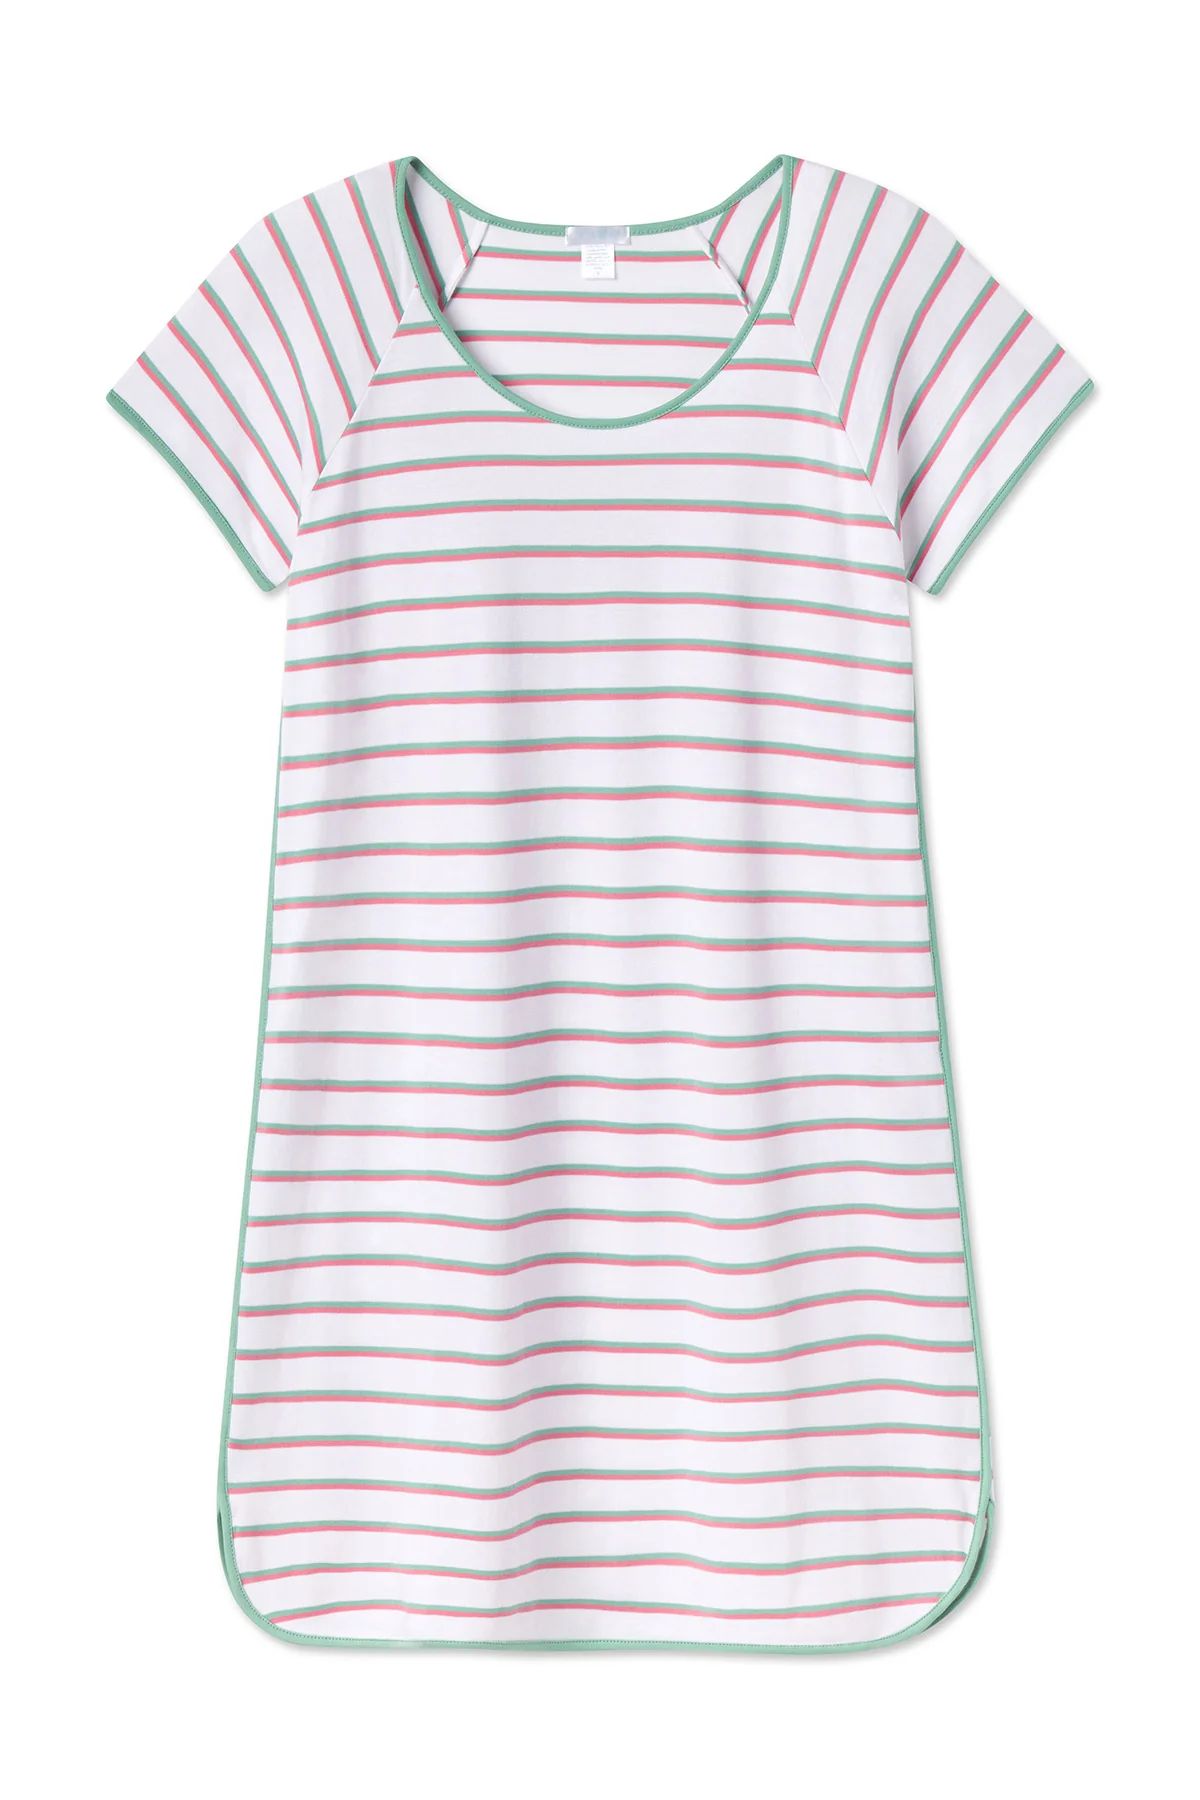 Pima Nightgown in Petunia Stripe | Lake Pajamas